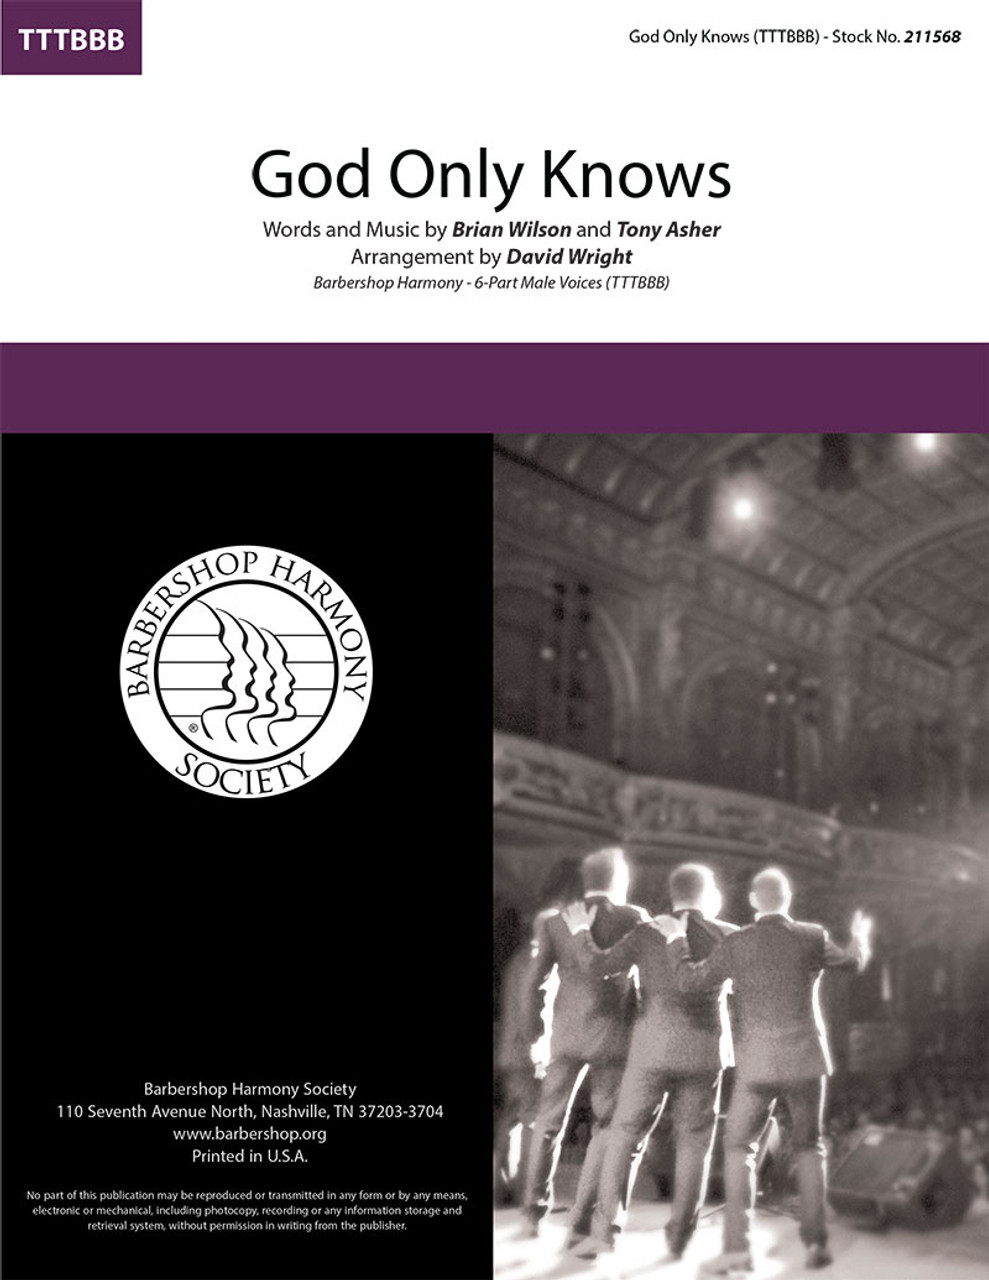 God Only Knows (6 part - TTTBBB) (arr. Wright)